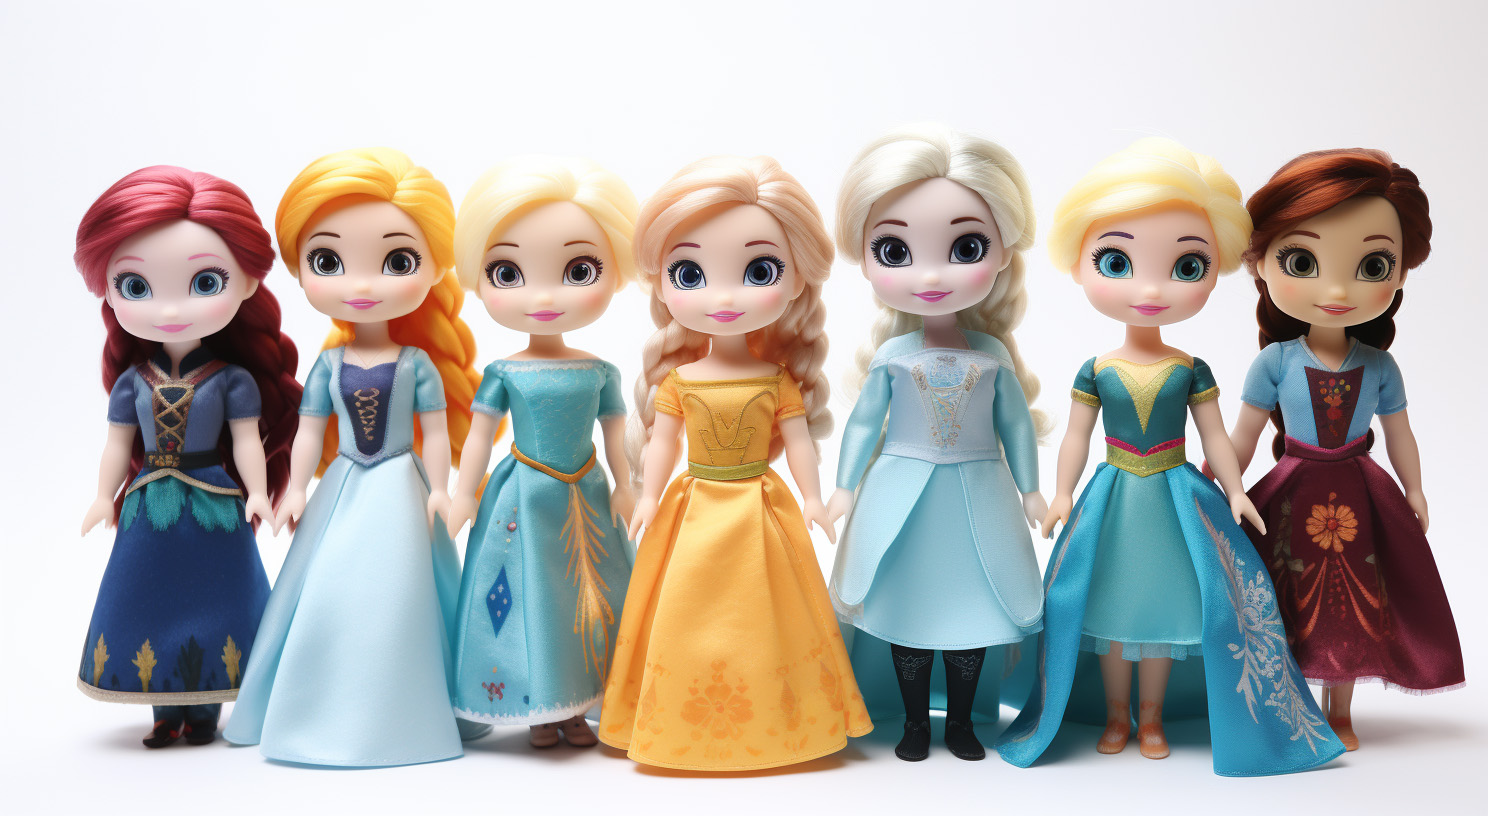 Elsa Puppen - Disney Magie trifft kreativen Spielspaß